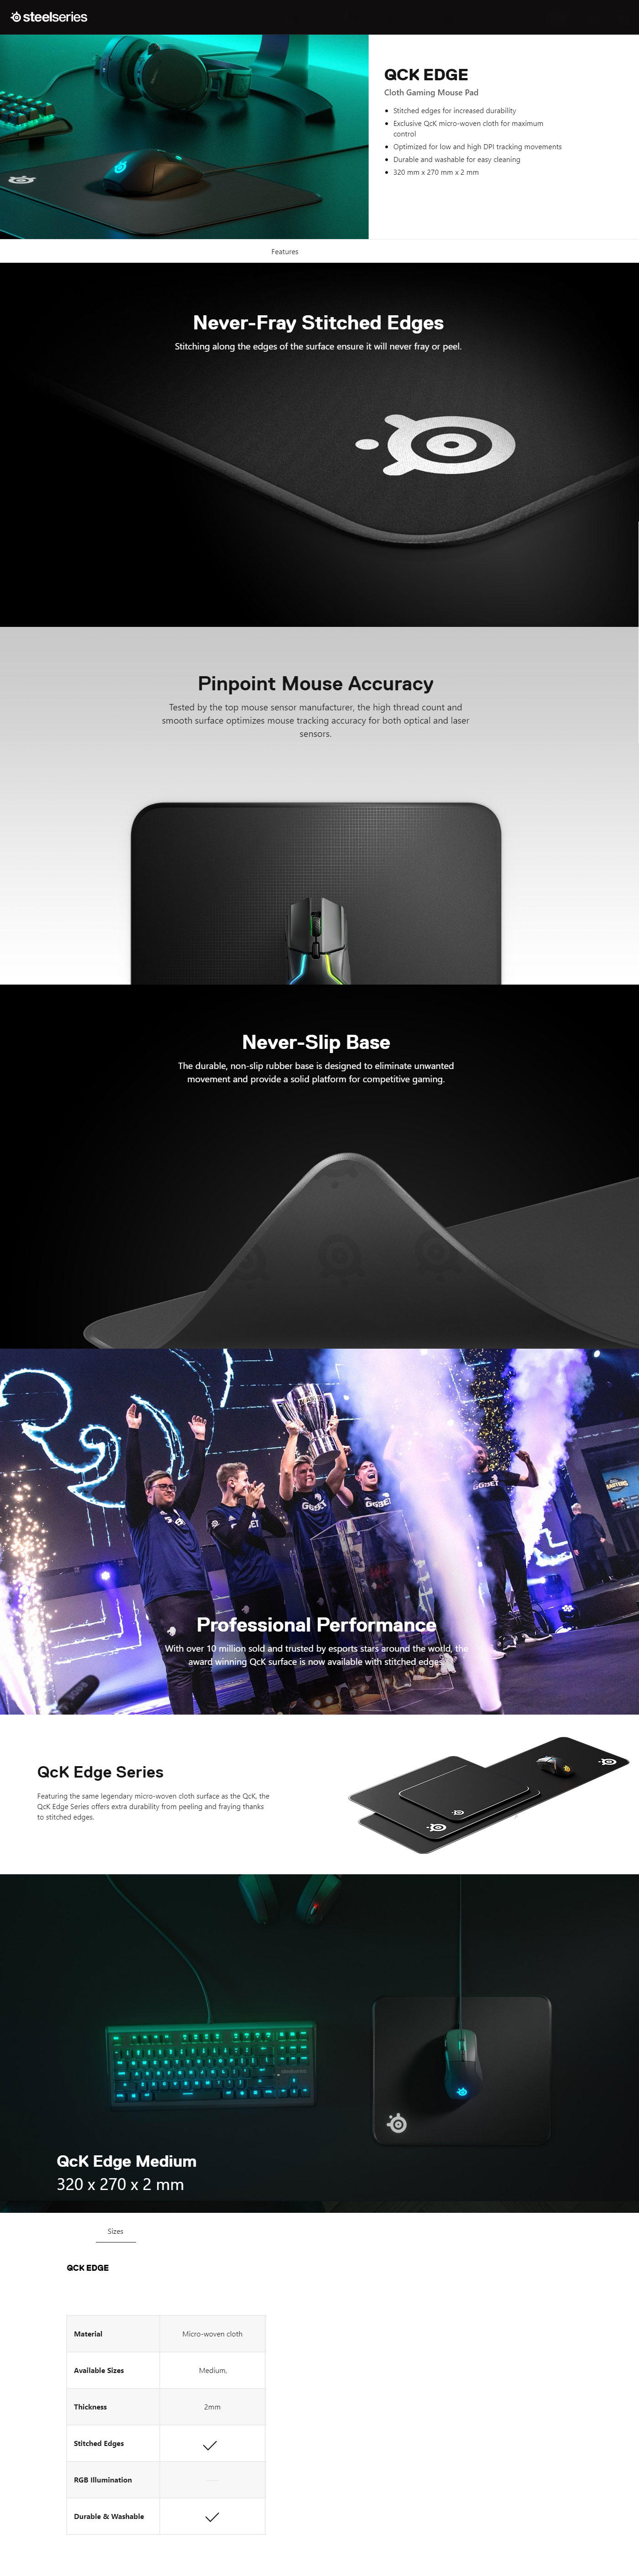  Buy Online SteelSeries QcK Edge Medium Gaming Mouse Mat - Black (63822)